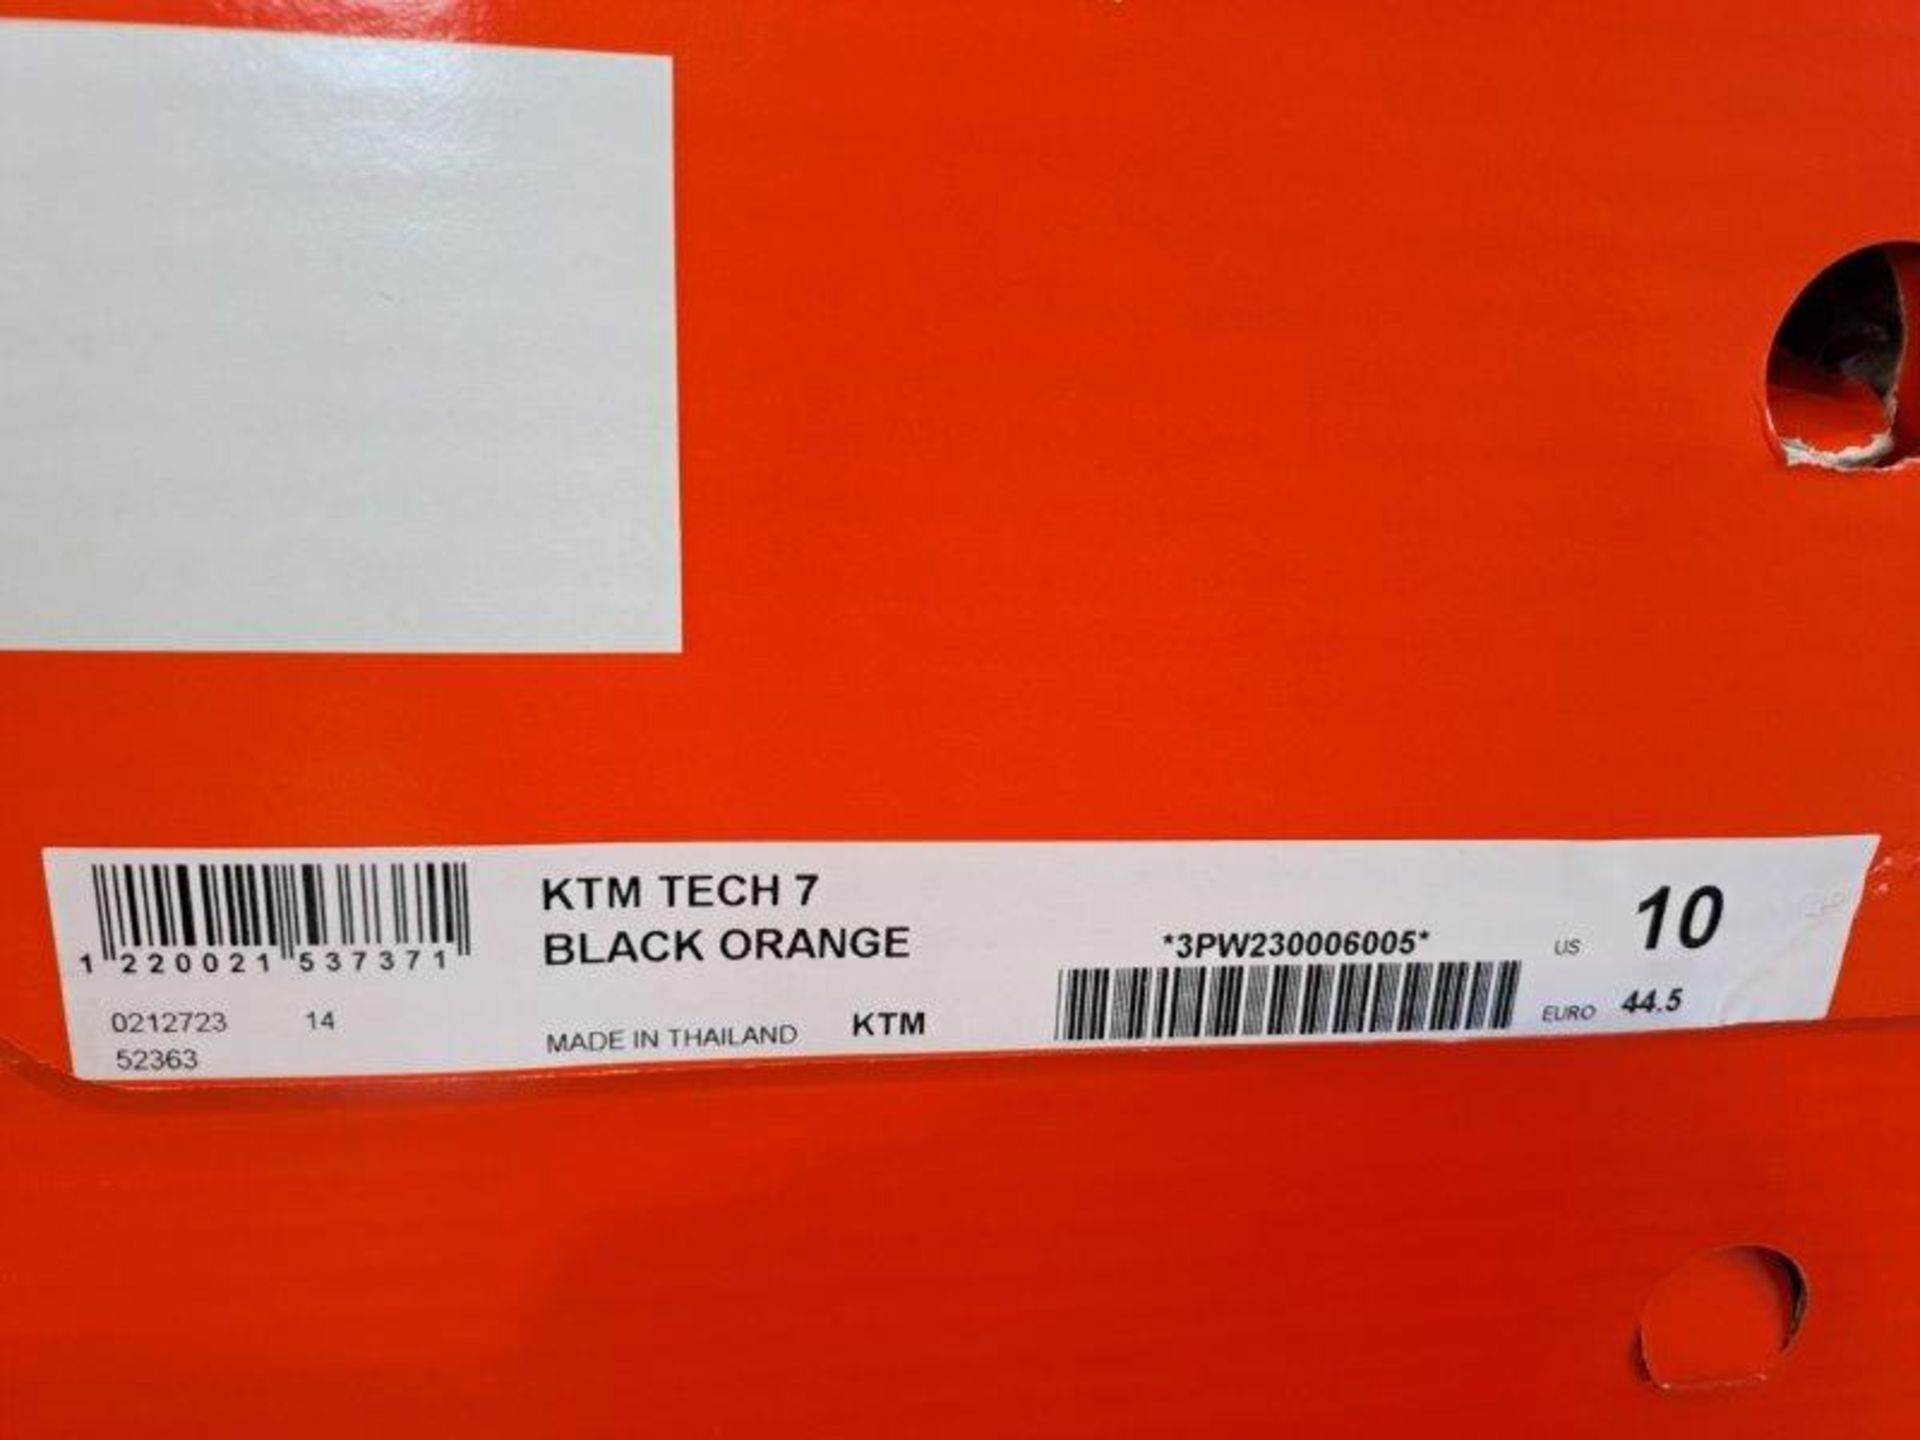 KTM Tech 7 Euro 44.5 Motorbike Boots - Image 3 of 6